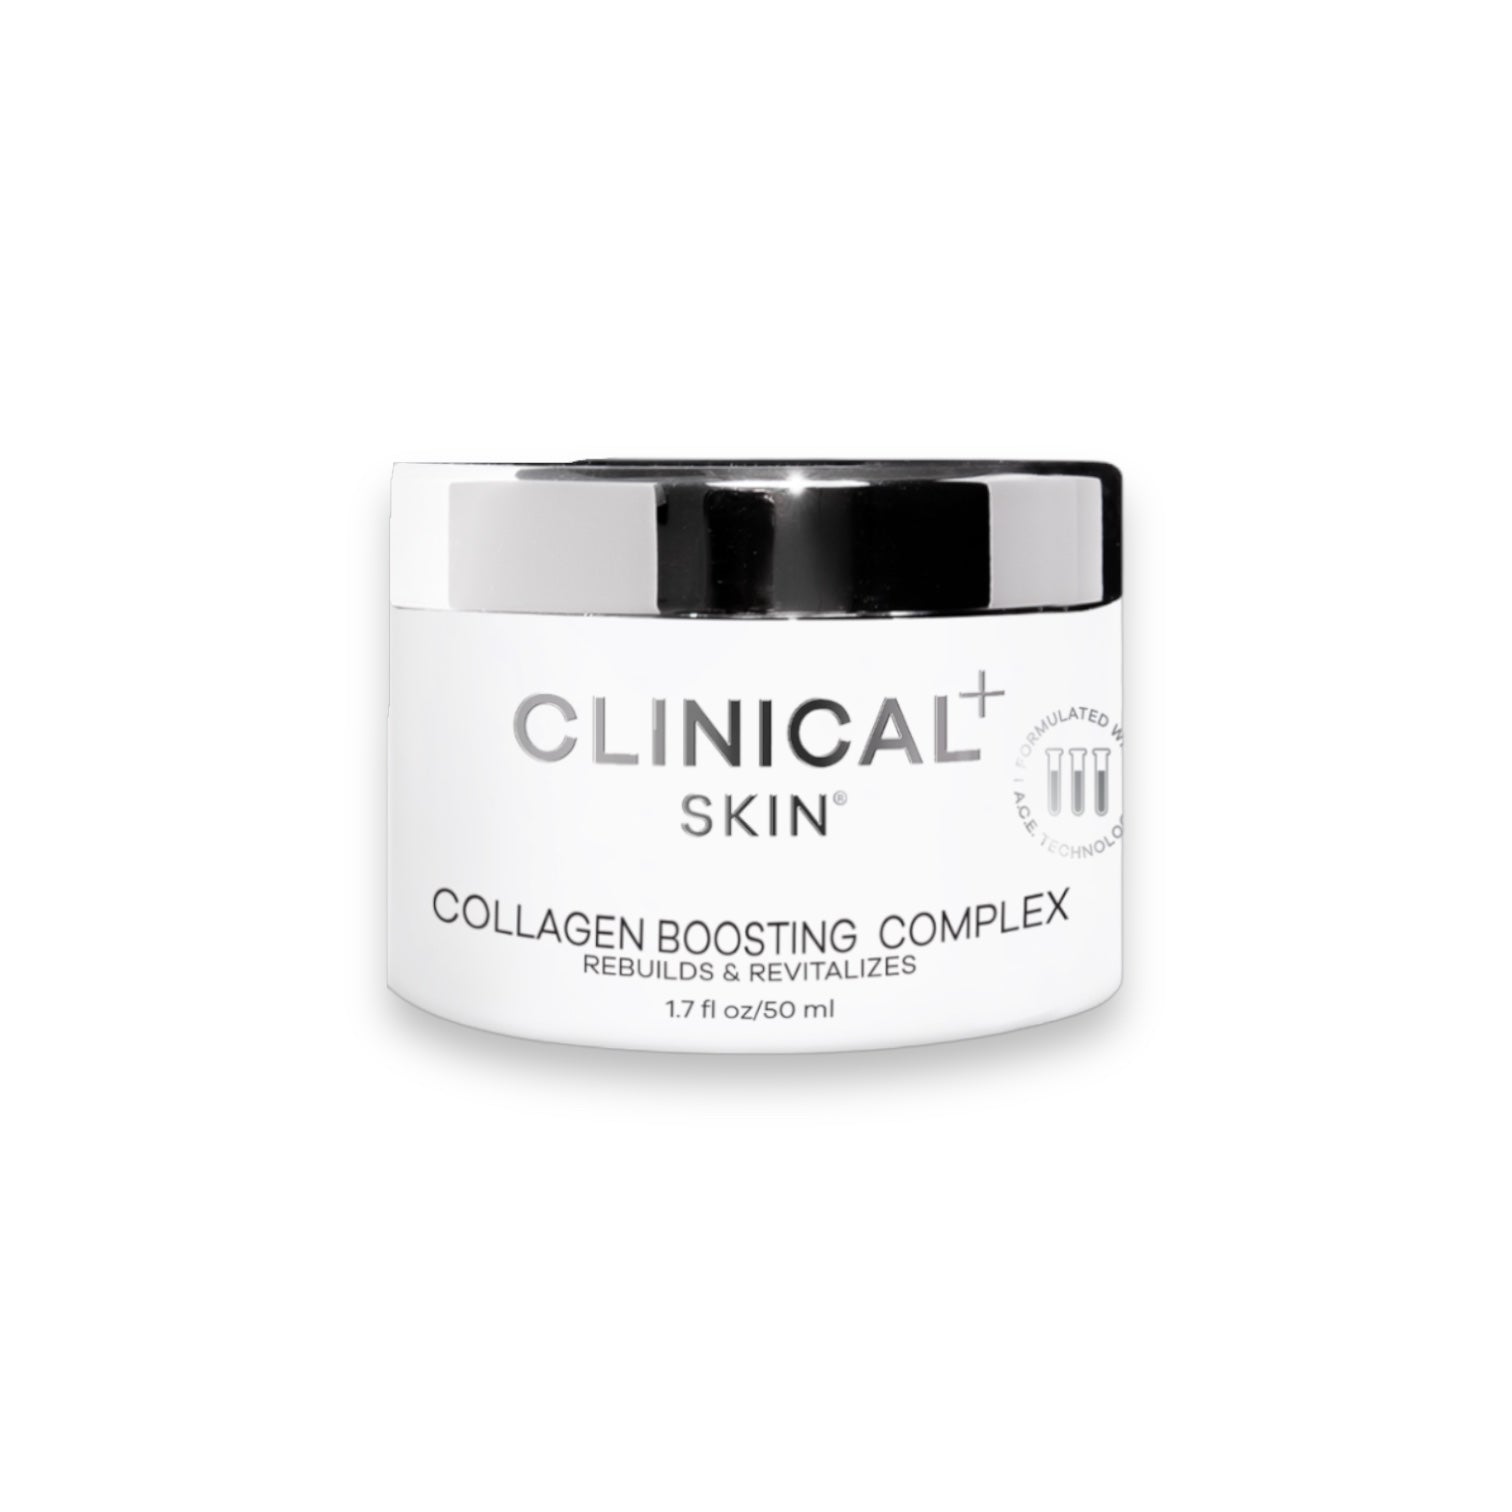 Clinical Skin Collagen Boosting Complex